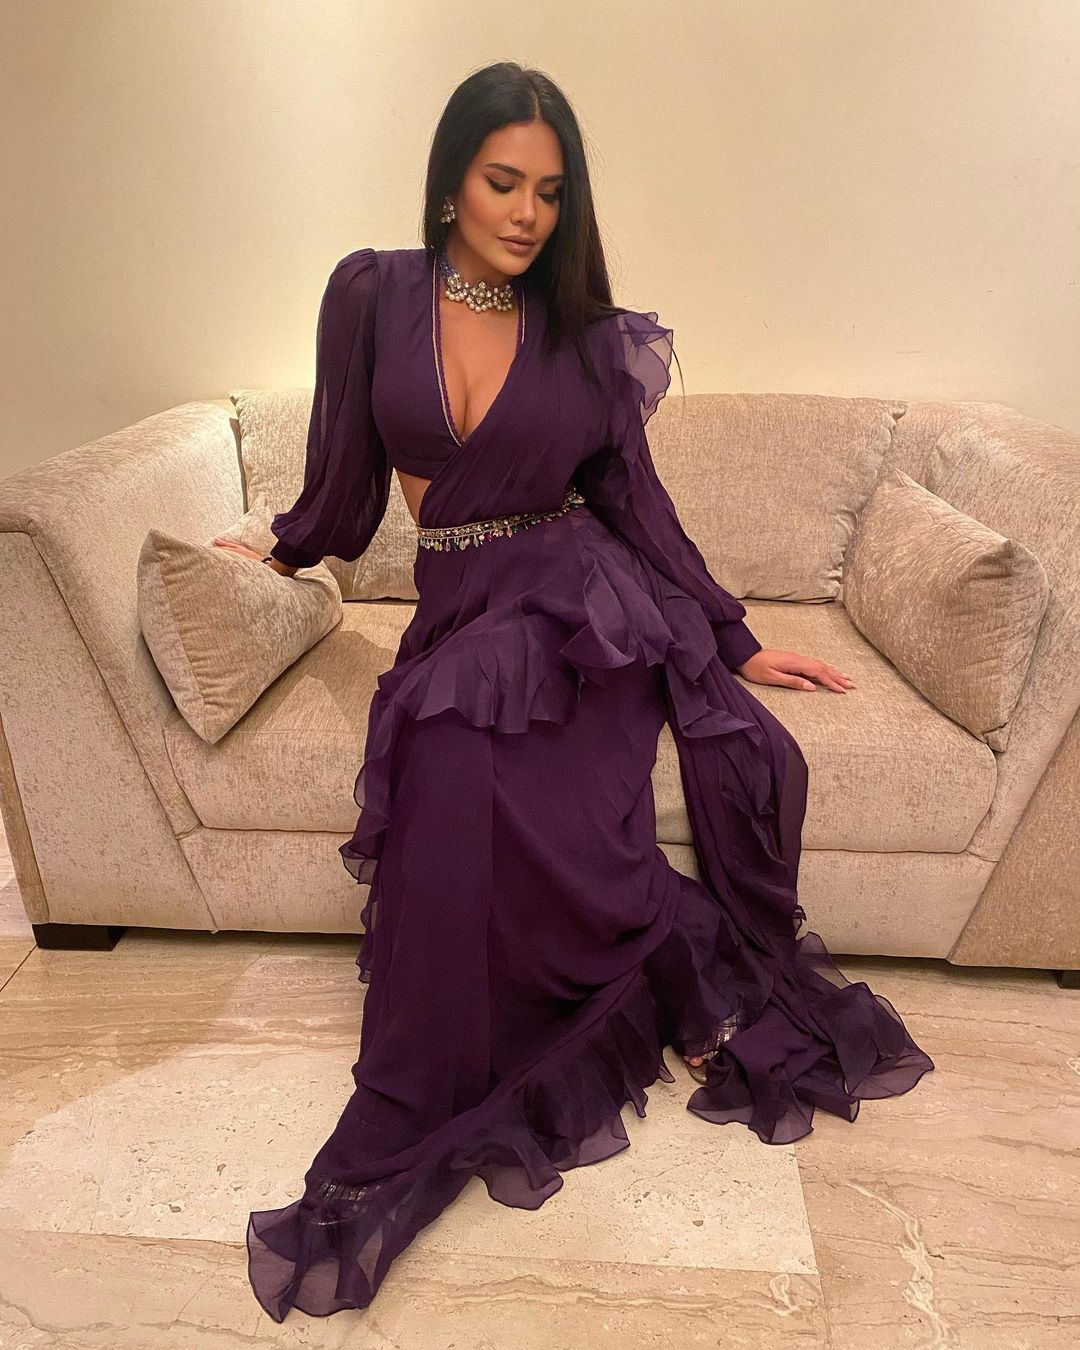 Esha Gupta flaunts her curves in the purple ruffled saree